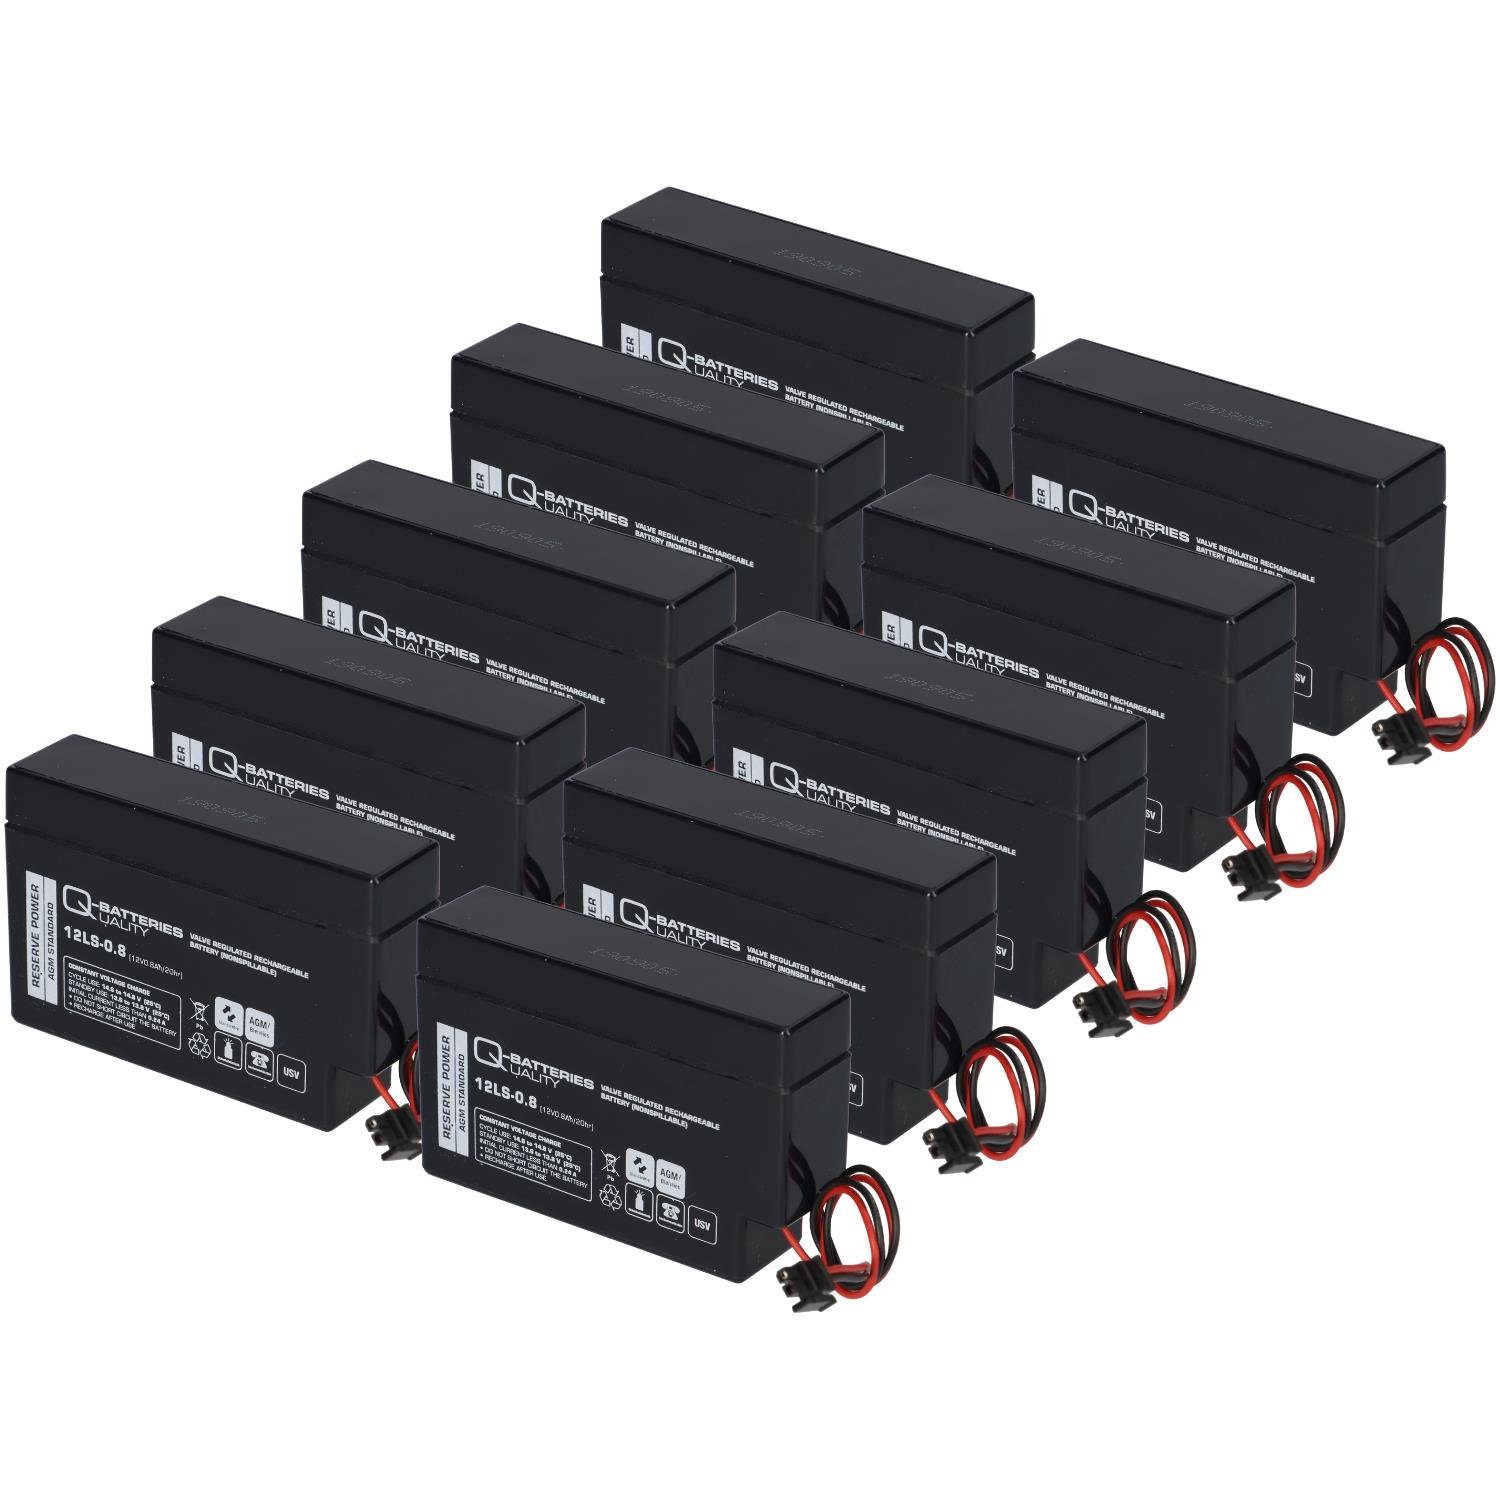 Q-Batteries 10x Q-Batteries 12LS-0.8 12V 0,8Ah AGM Blei-Vlies Akku Heim & Haus Bleiakkus